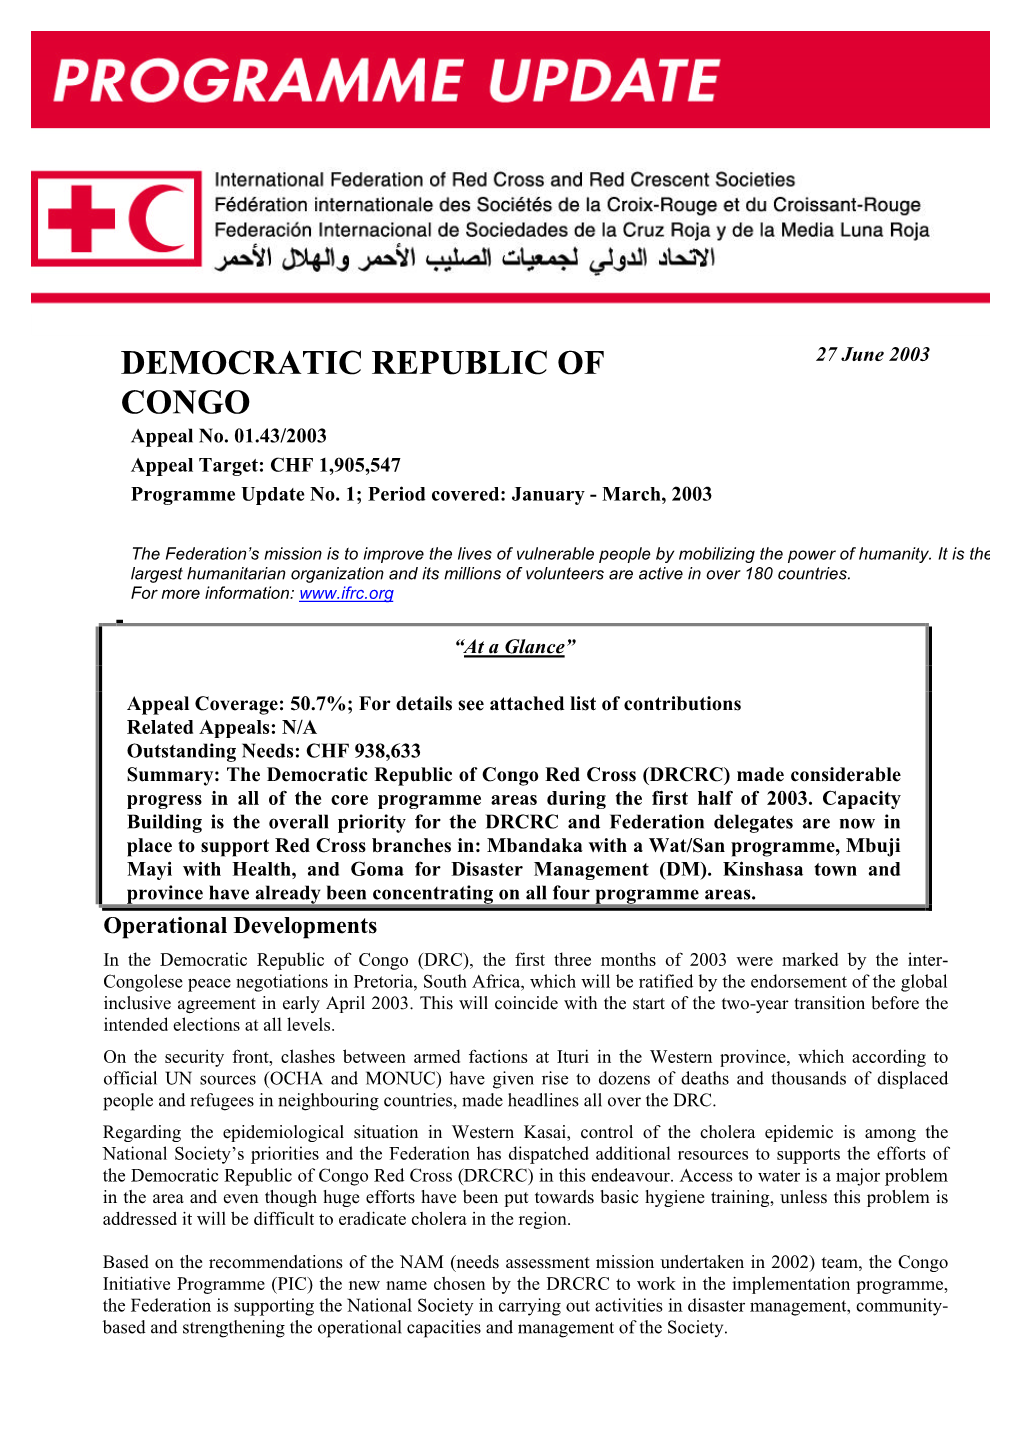 DEMOCRATIC REPUBLIC of CONGO Appeal No